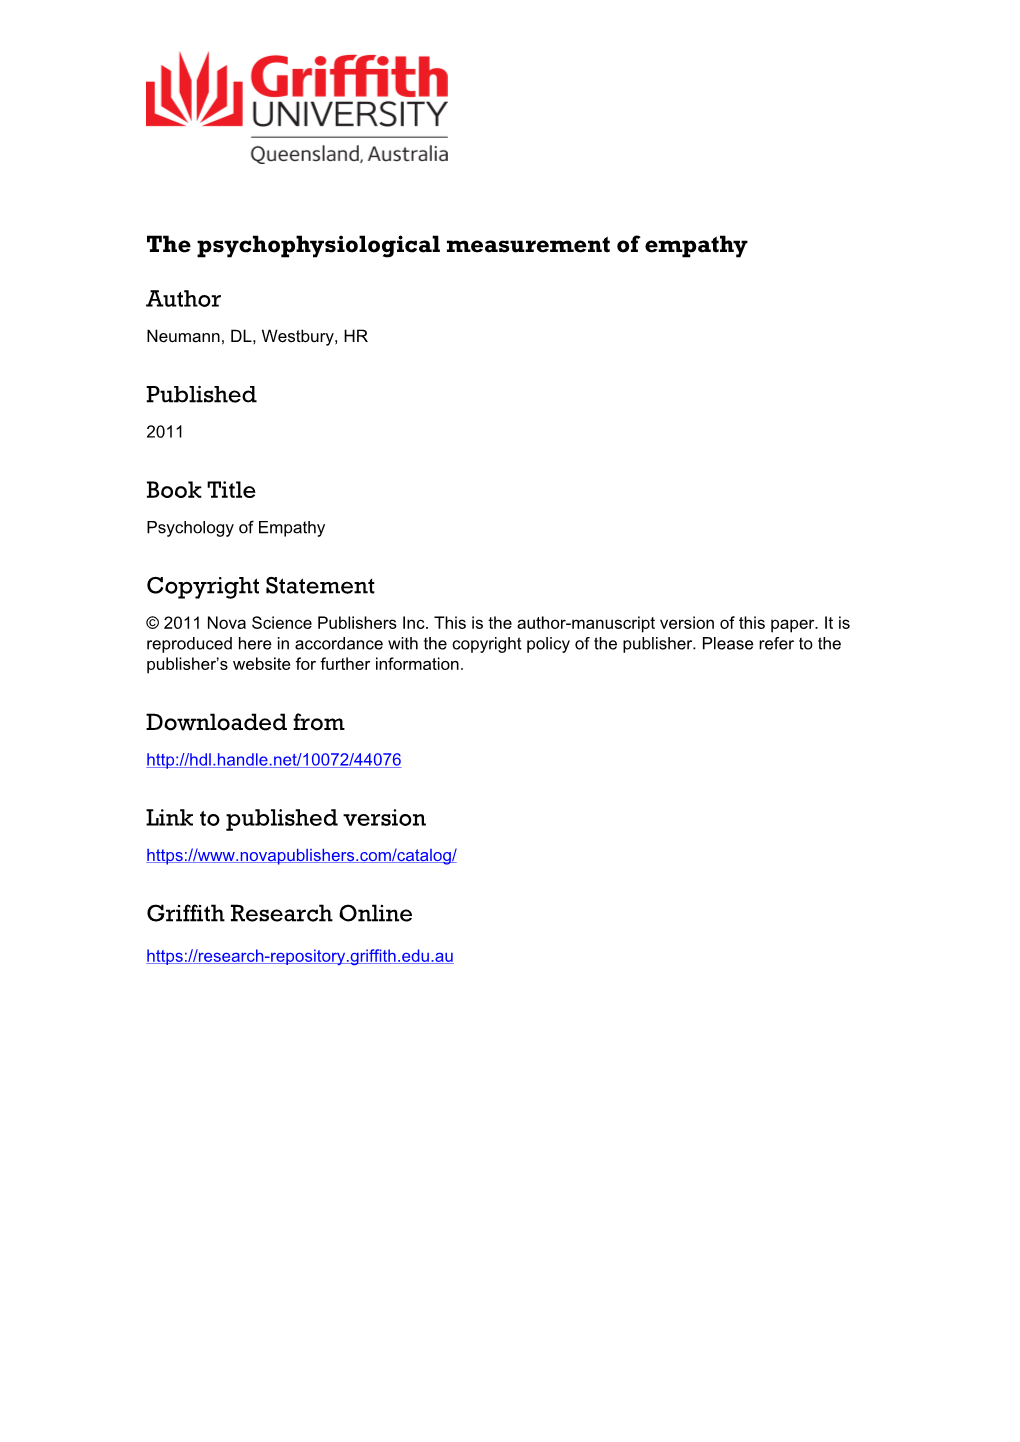 The Psychophysiological Measurement of Empathy